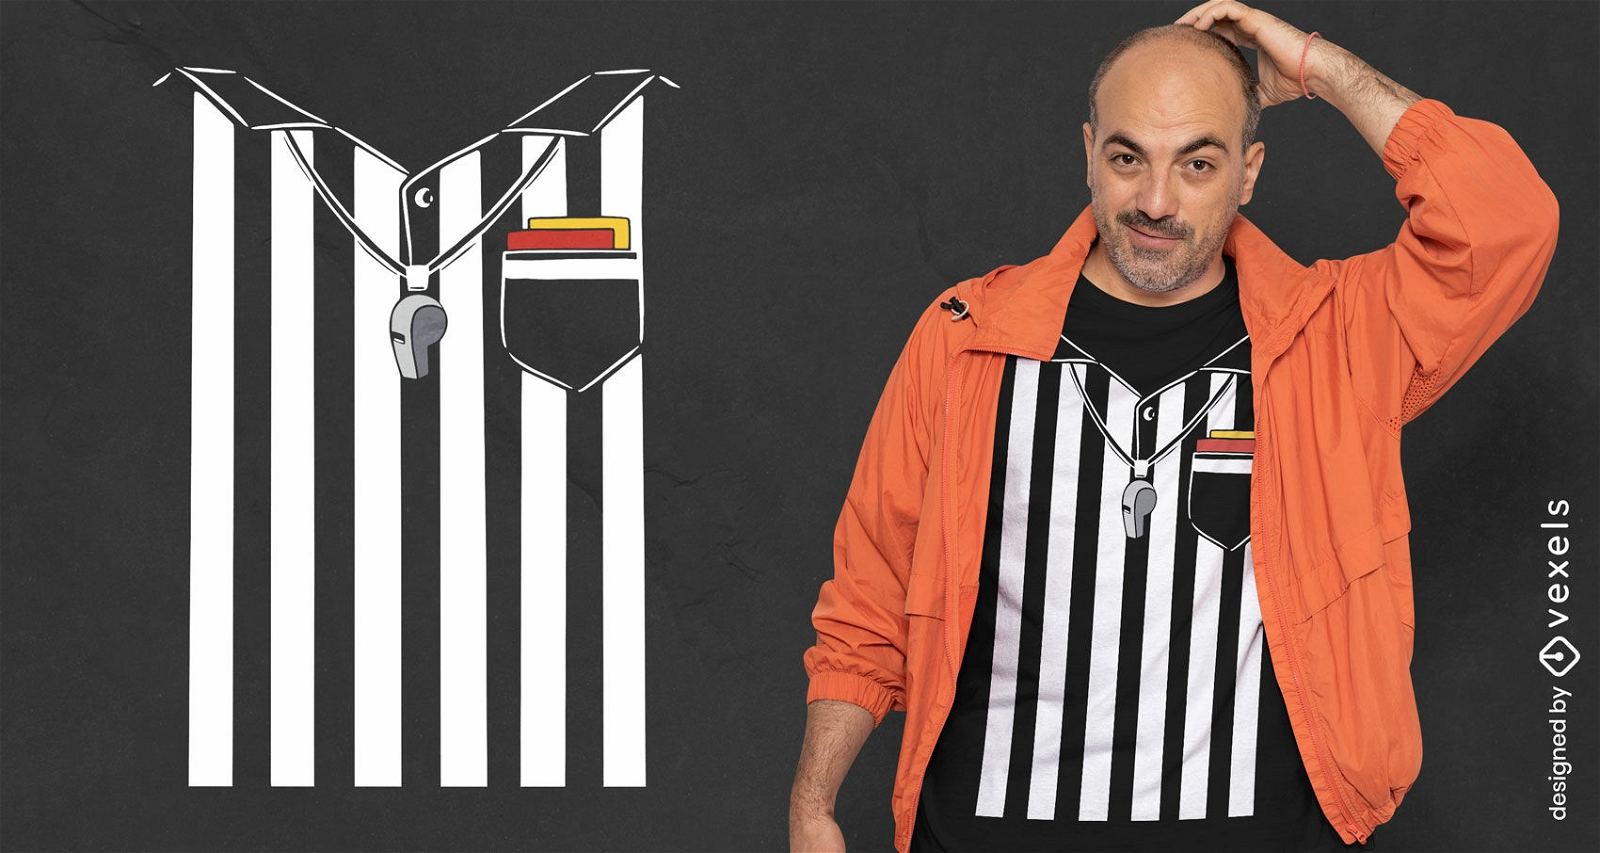 Descarga Vector De Diseño De Camiseta De árbitro De Fútbol.